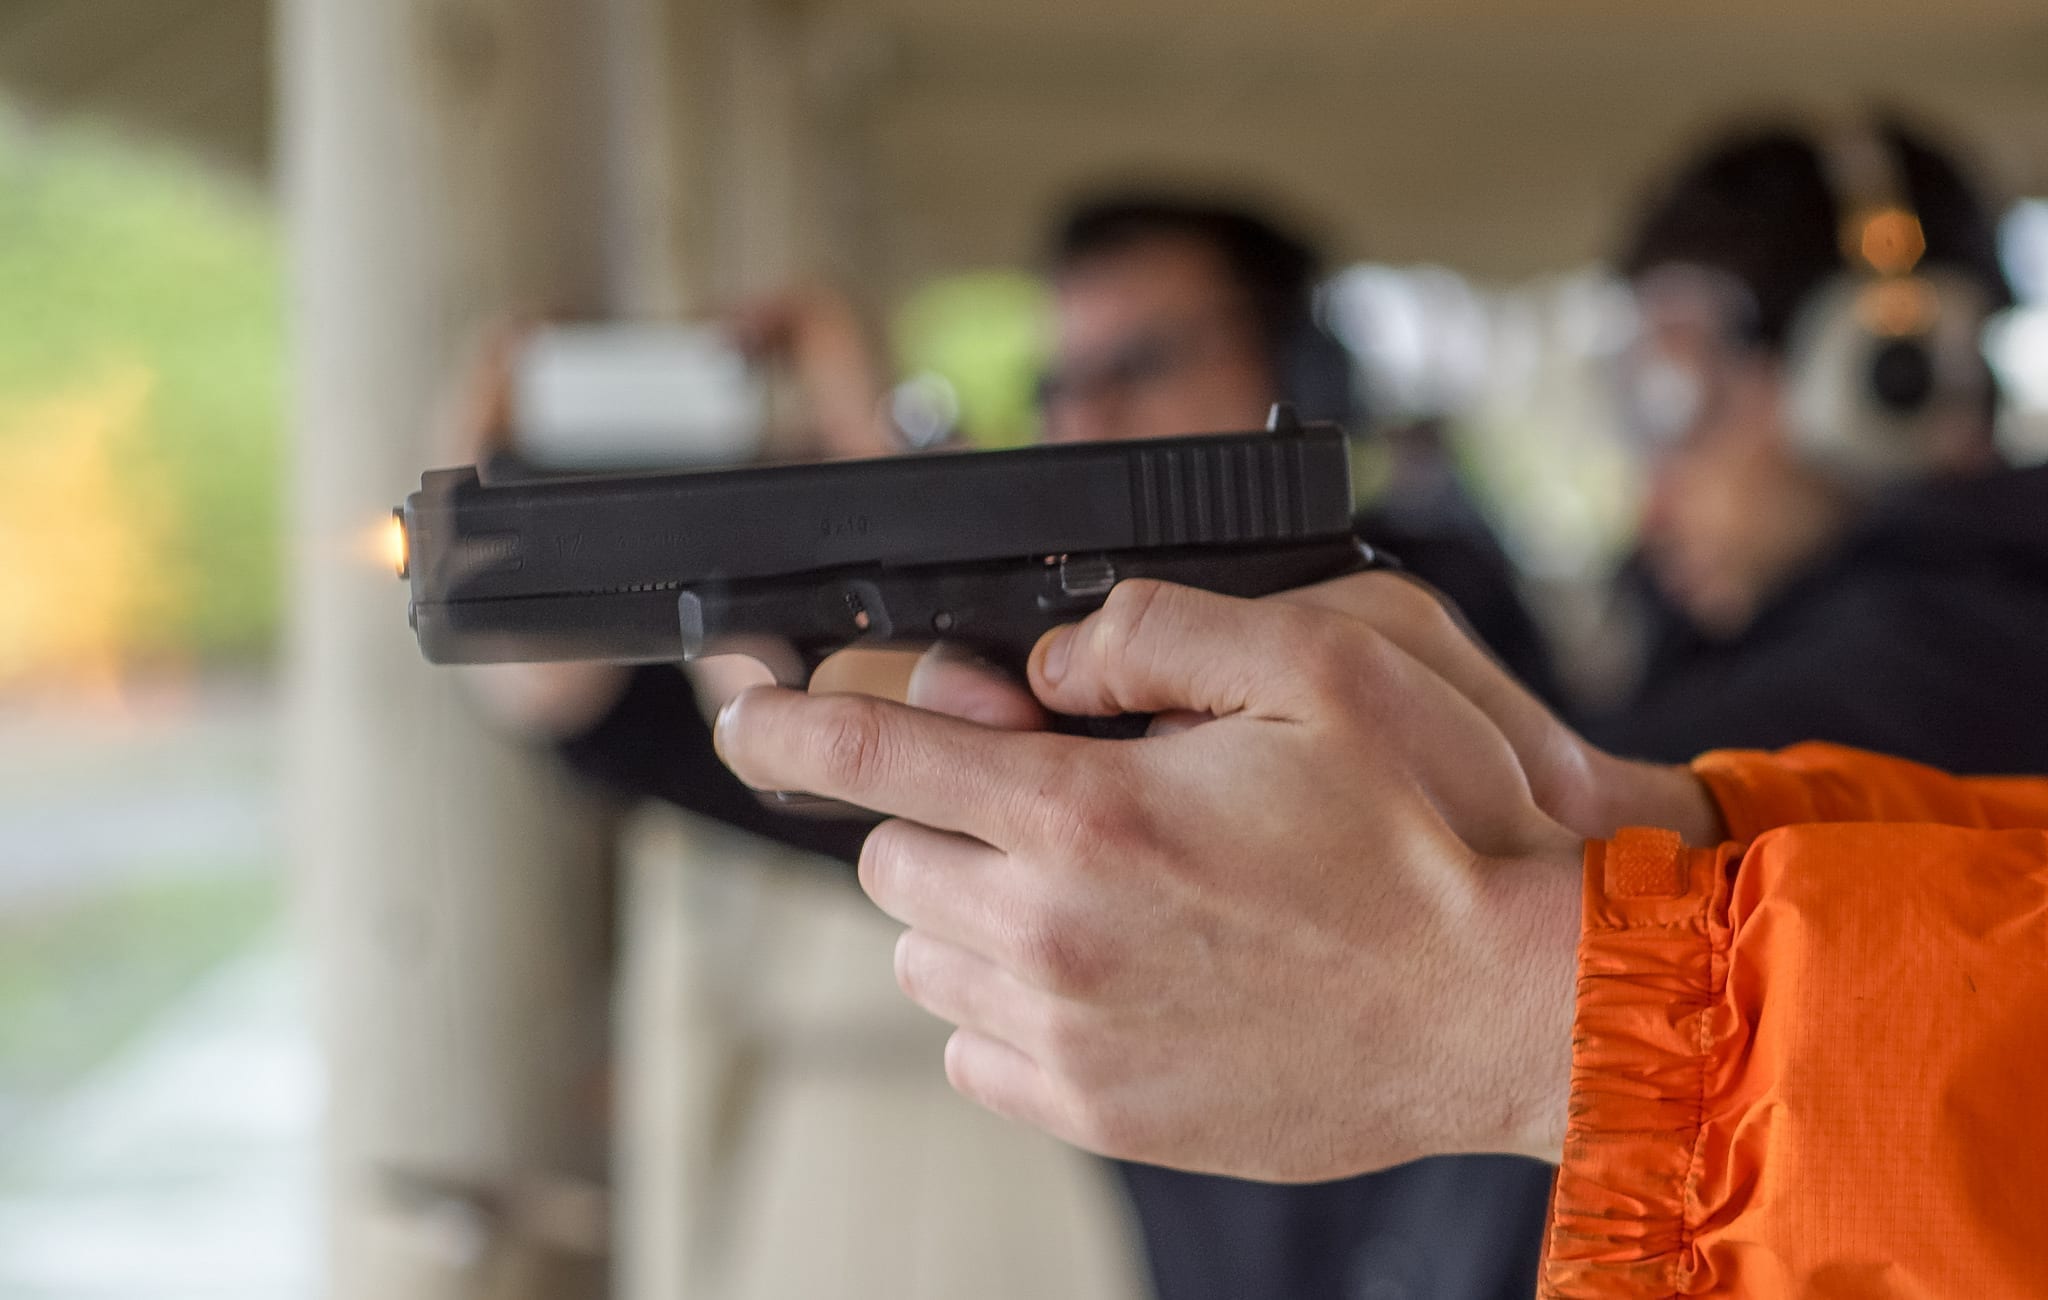 Man firing handgun; image by Peretz Partensky, via Flickr, CC BY-SA 2.0, no changes.